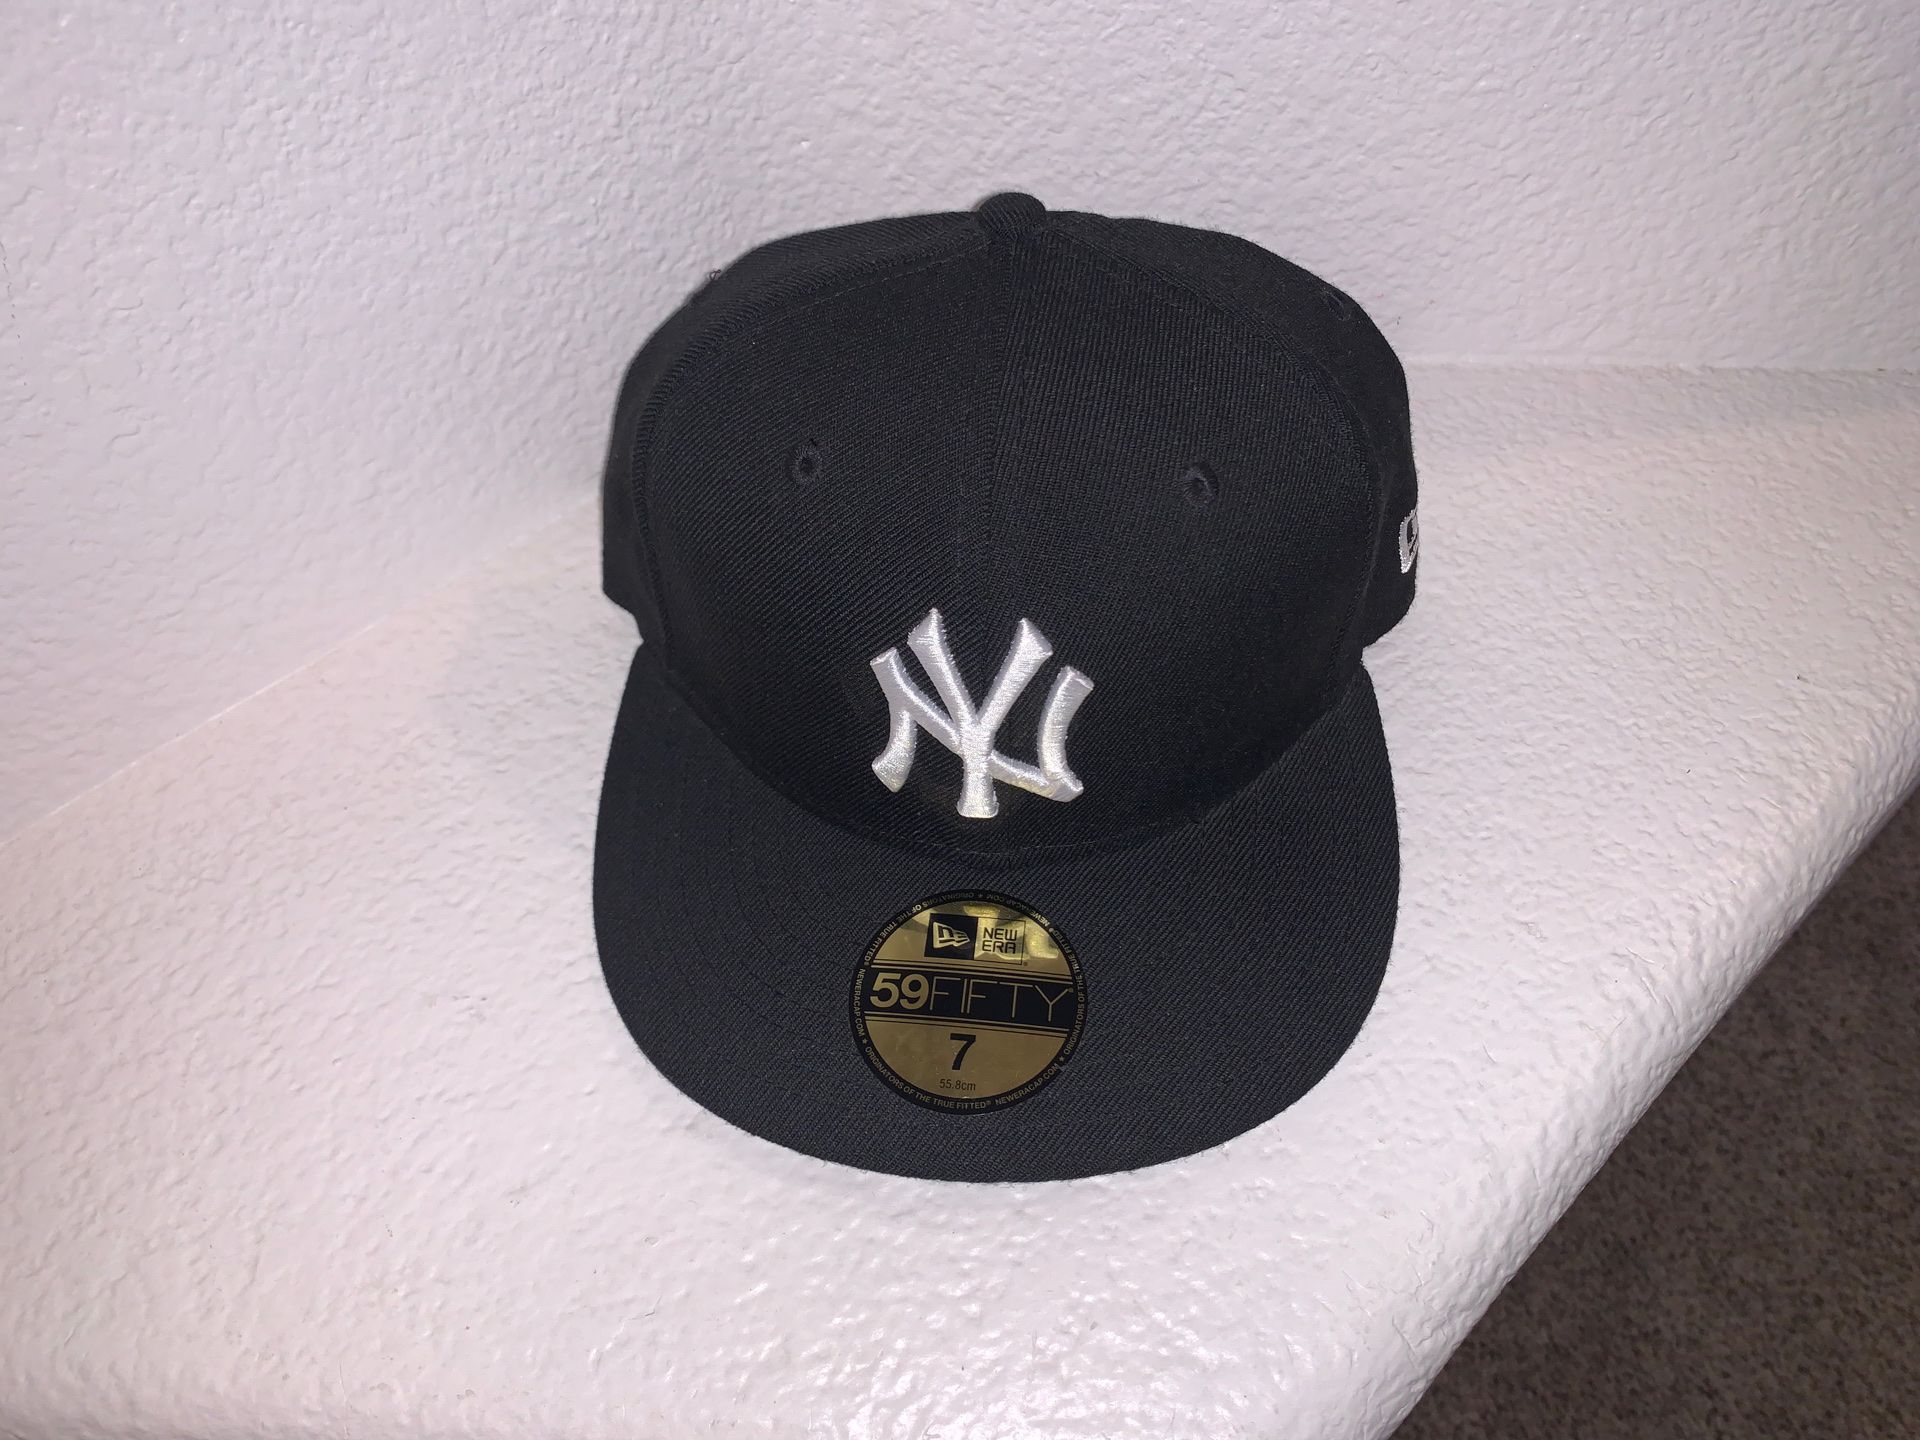 New york yankee hat